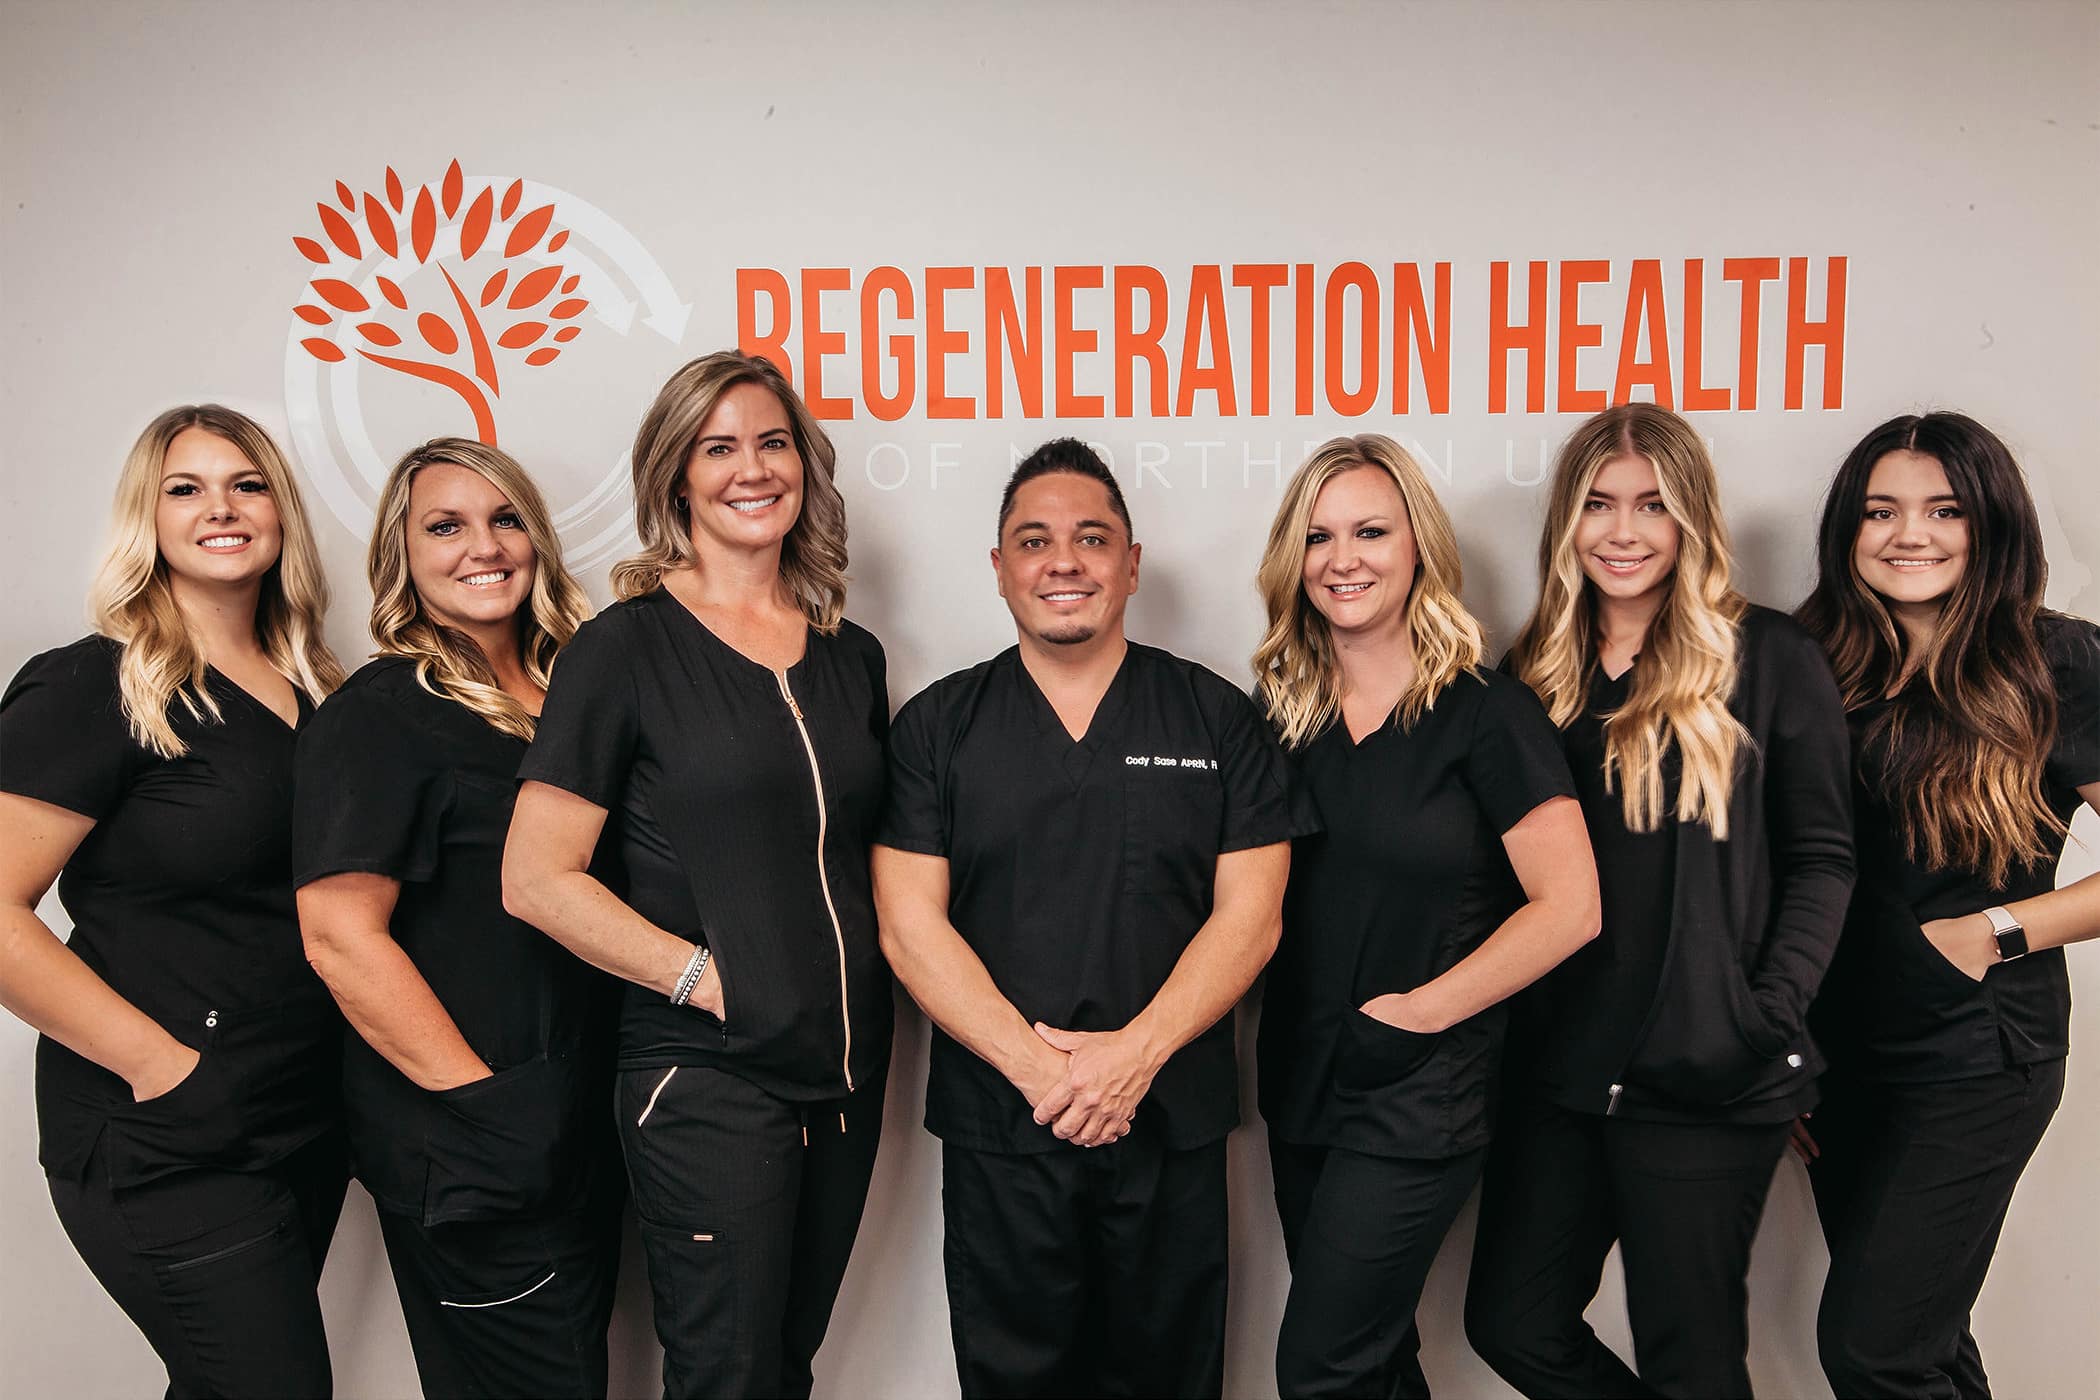 Regeneration Health